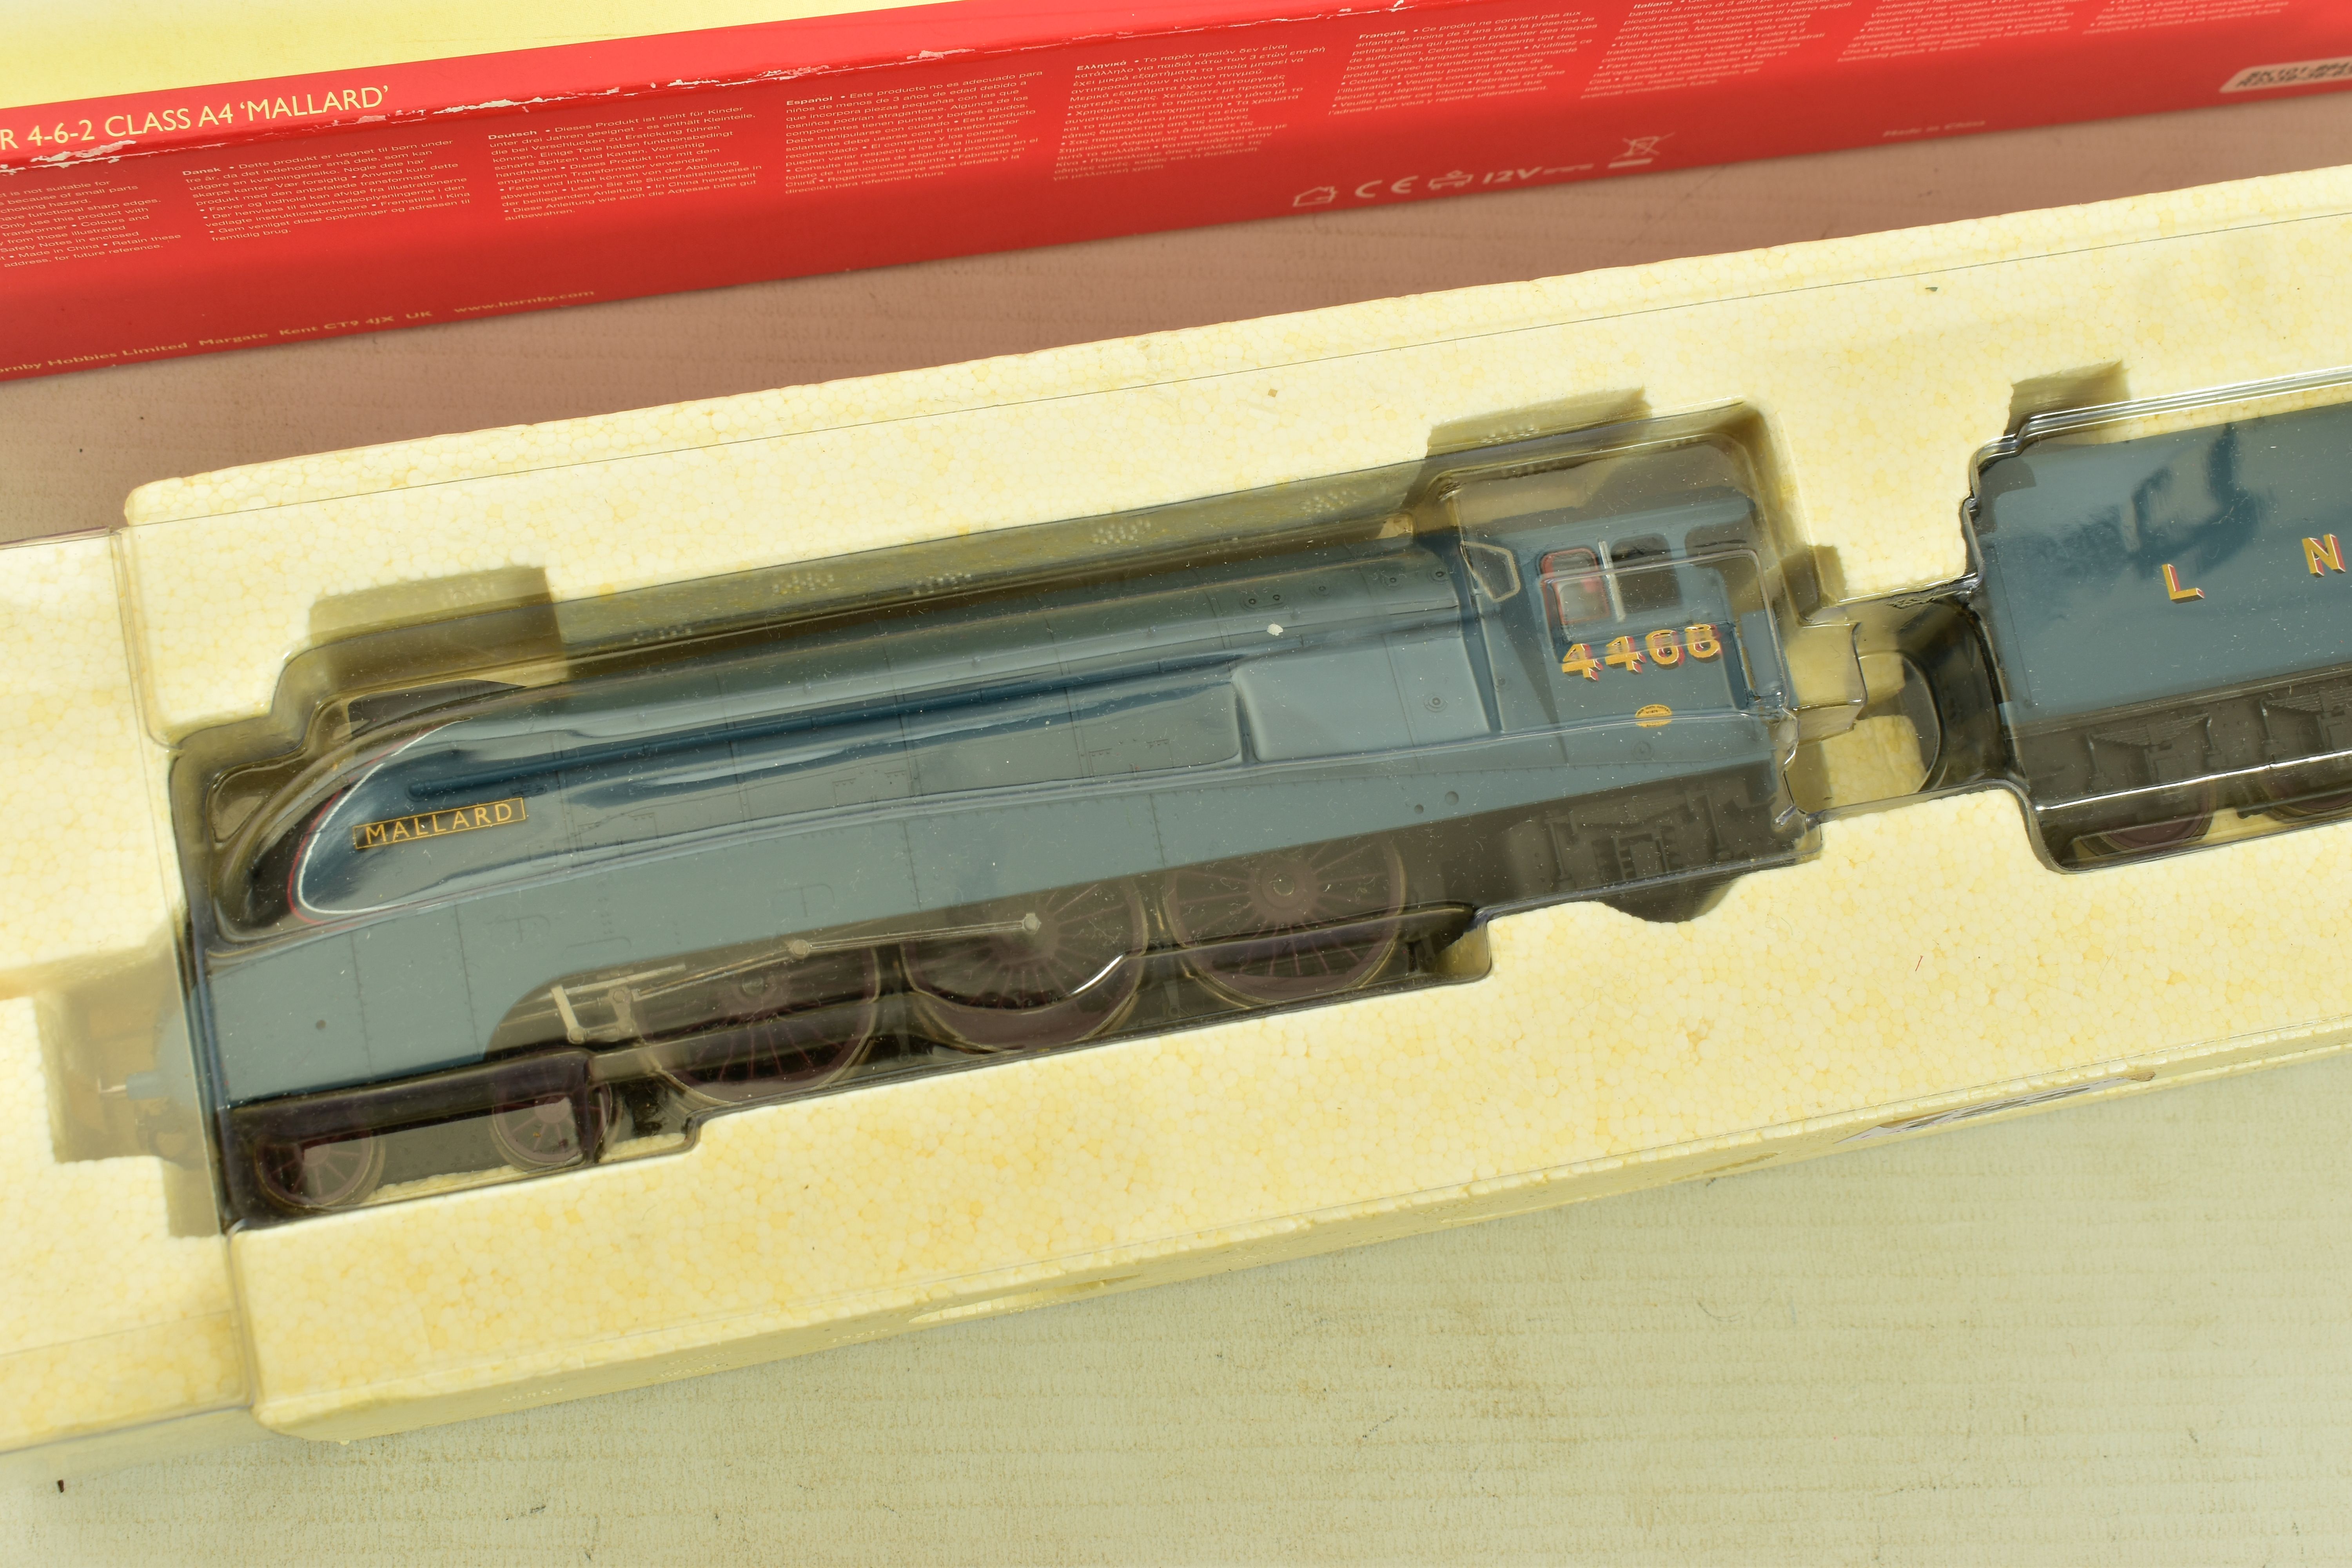 A BOXED HORNBY RAILWAYS OO GAUGE A4 CLASS LOCOMOTIVE AND TENDER, 'Mallard' No.4468, L.N.E.R. blue - Image 2 of 8